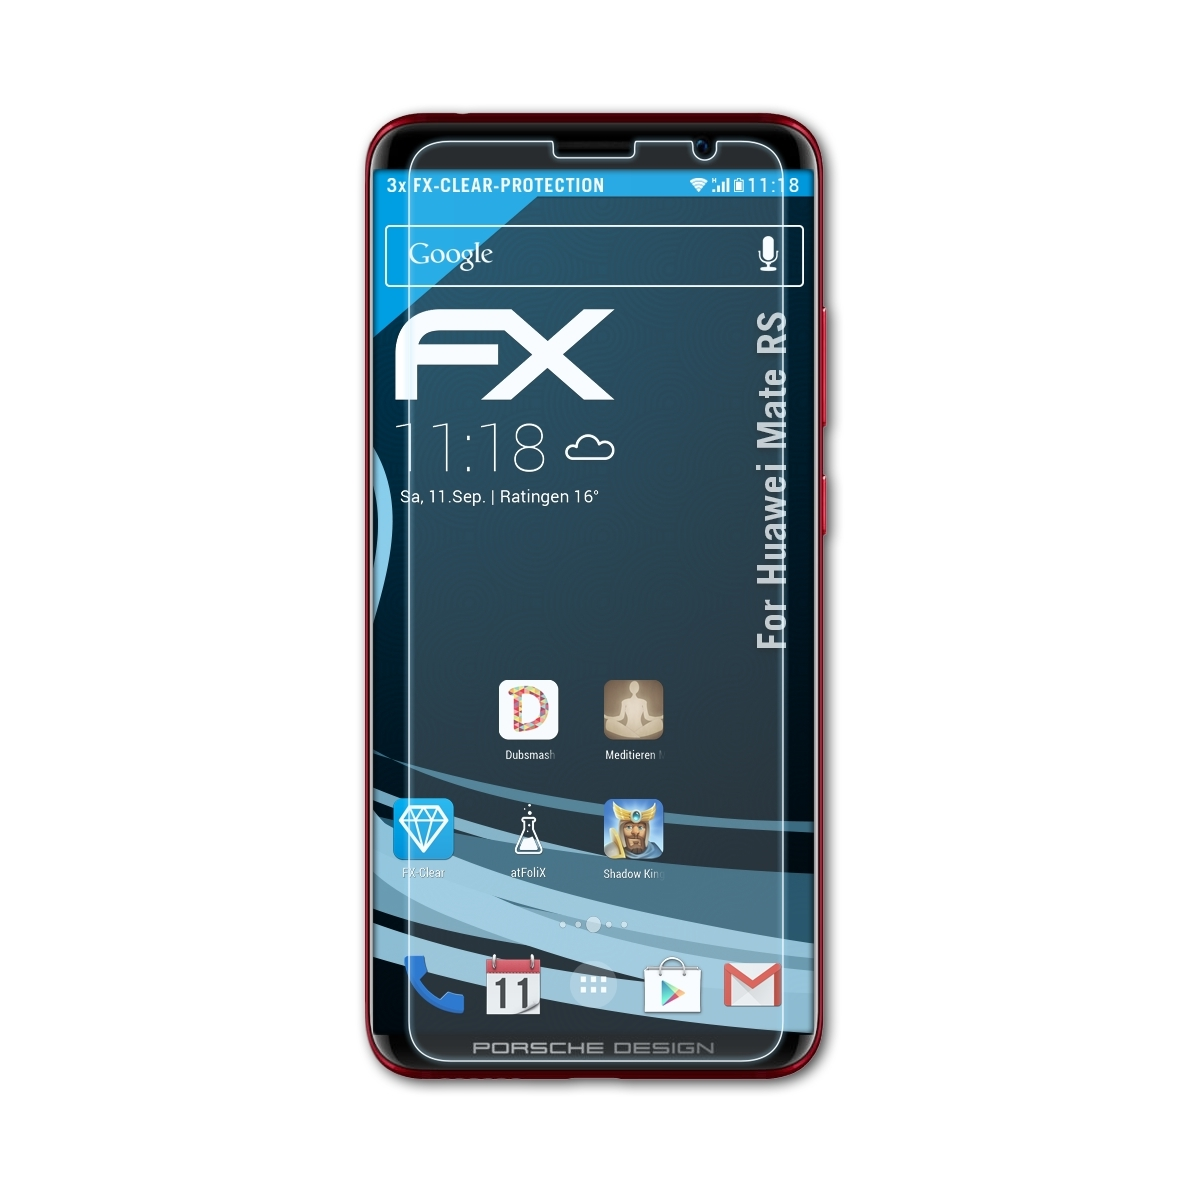 Displayschutz(für ATFOLIX FX-Clear Huawei RS) Mate 3x